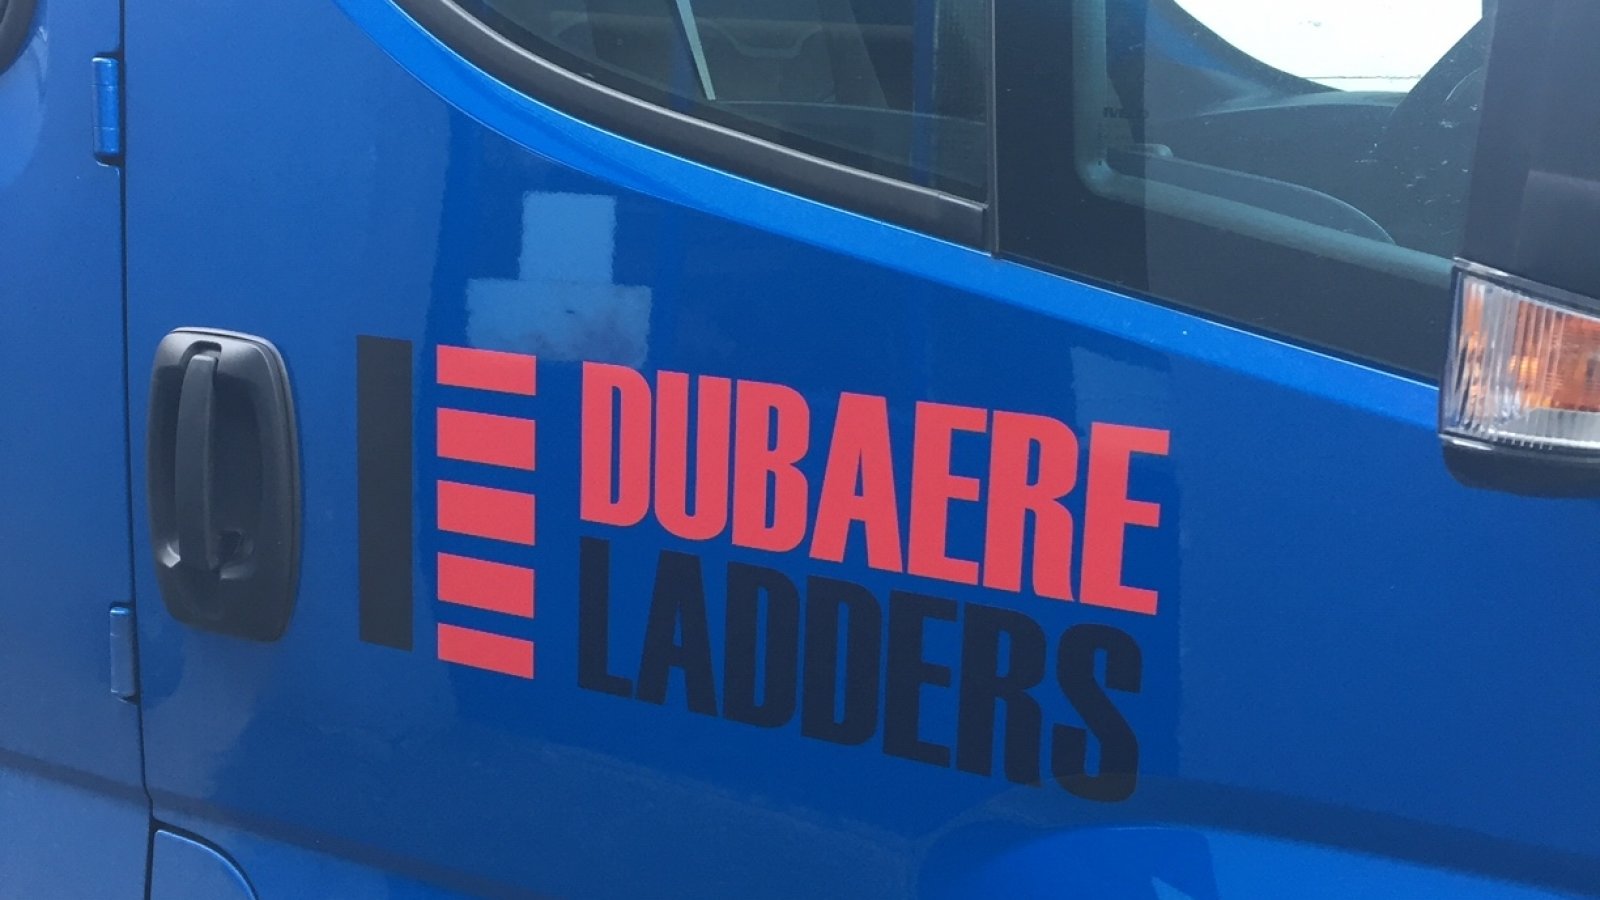 Promo - Artikel - Dubaere Ladders